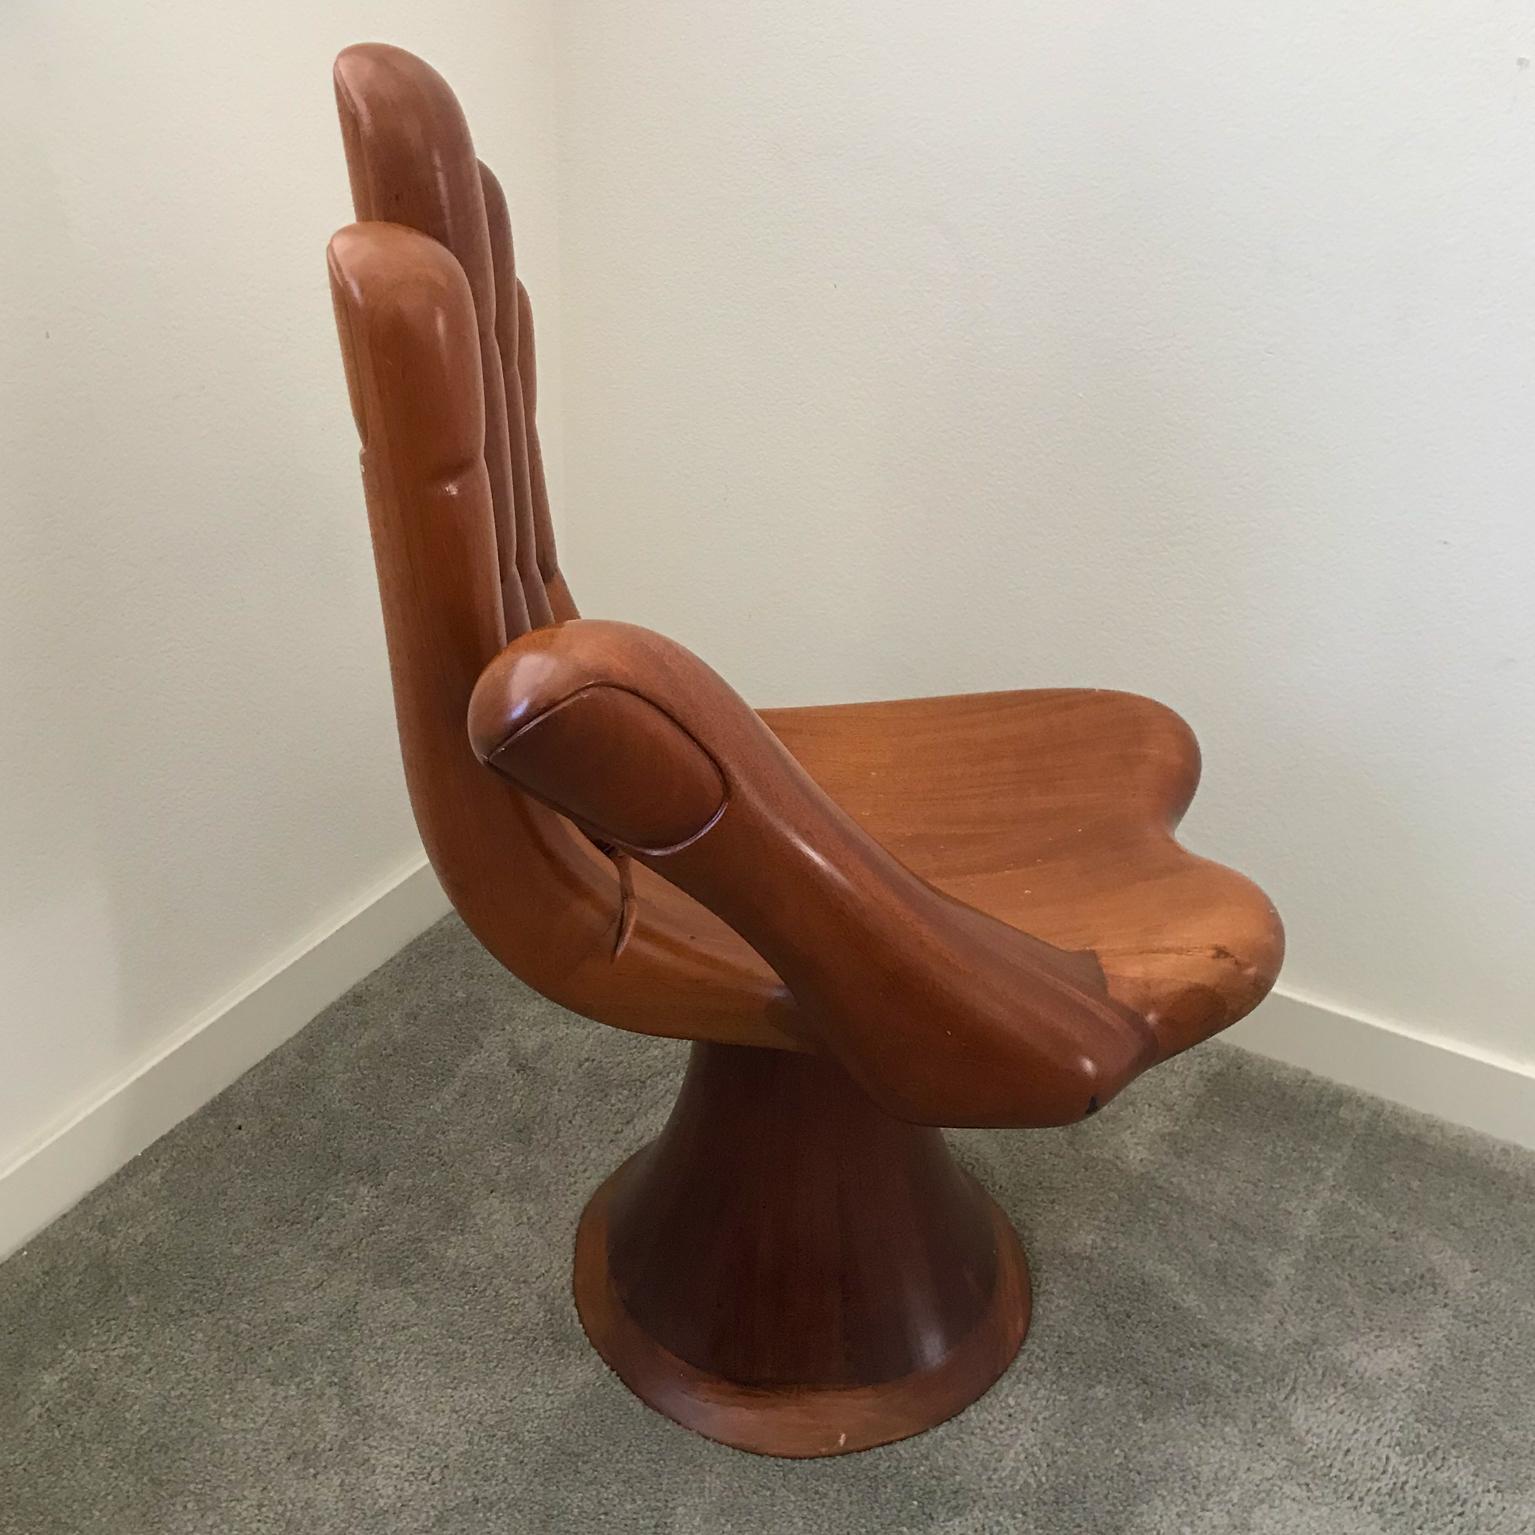 Pedro Friedeberg Mahogany Wood Hand Chair Surrealist Mid-century Modern 1